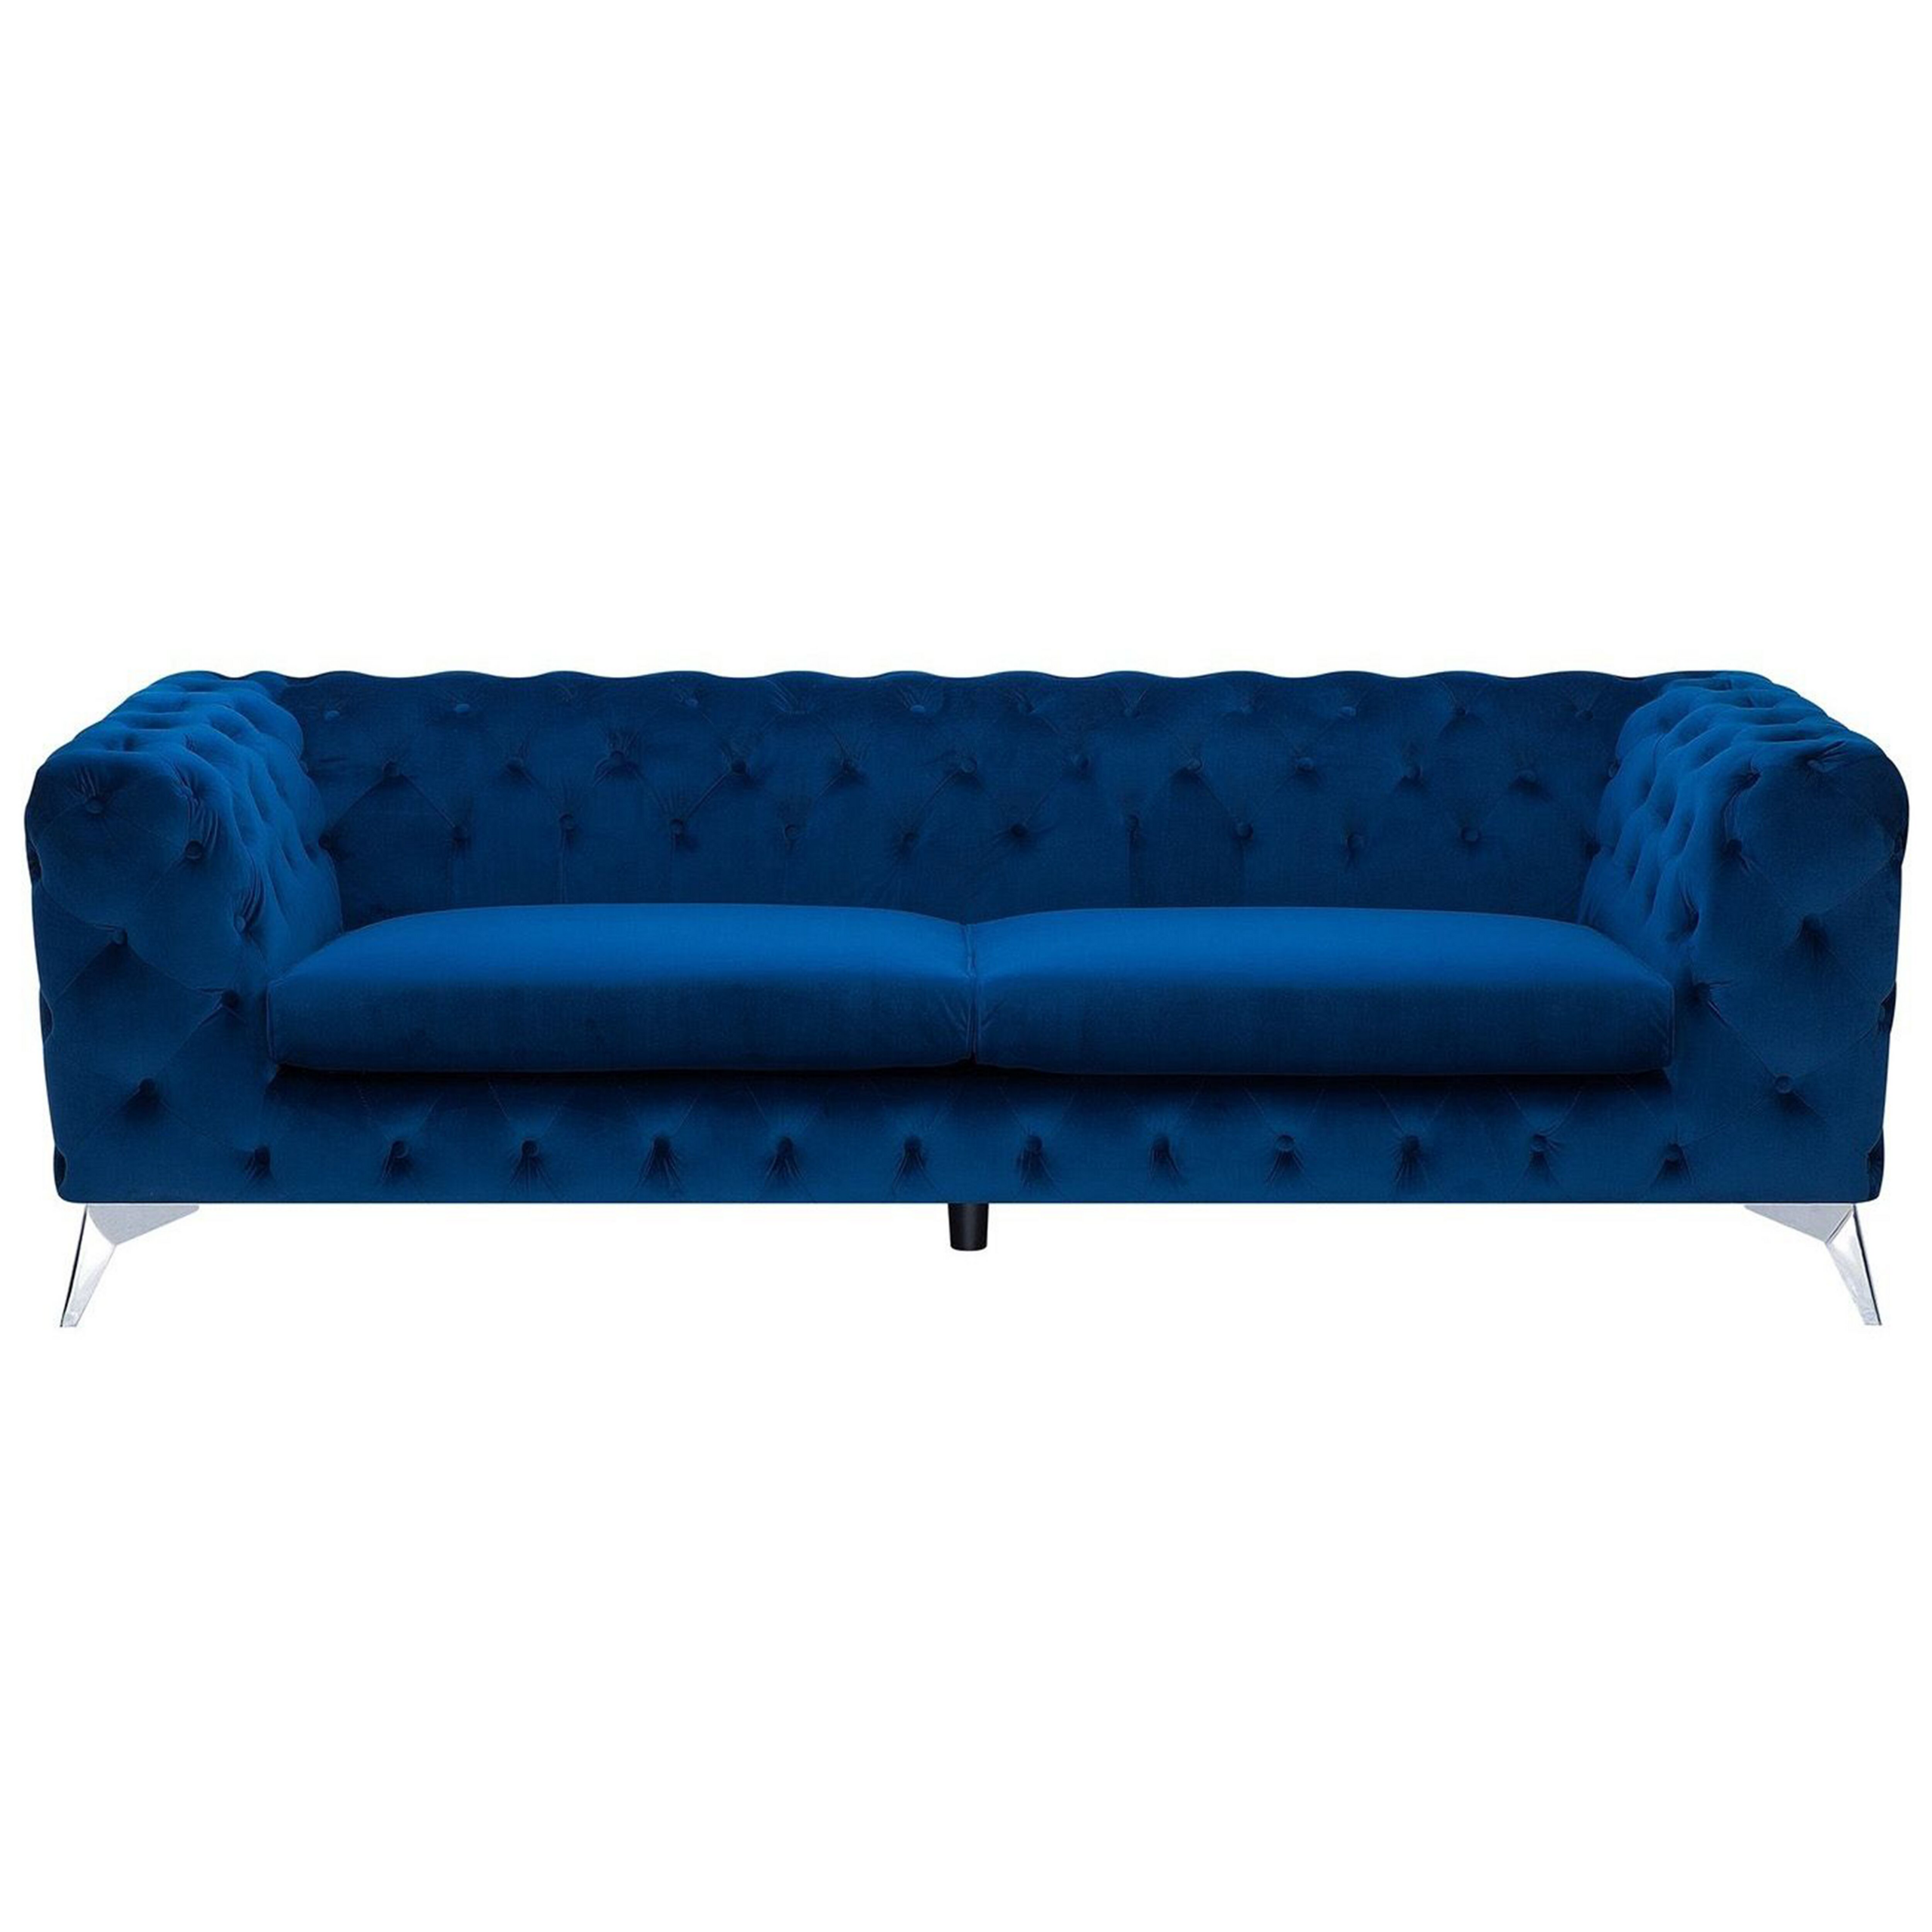 Beliani 3 Seater Sofa Blue Velvet Chesterfield Style Low Back